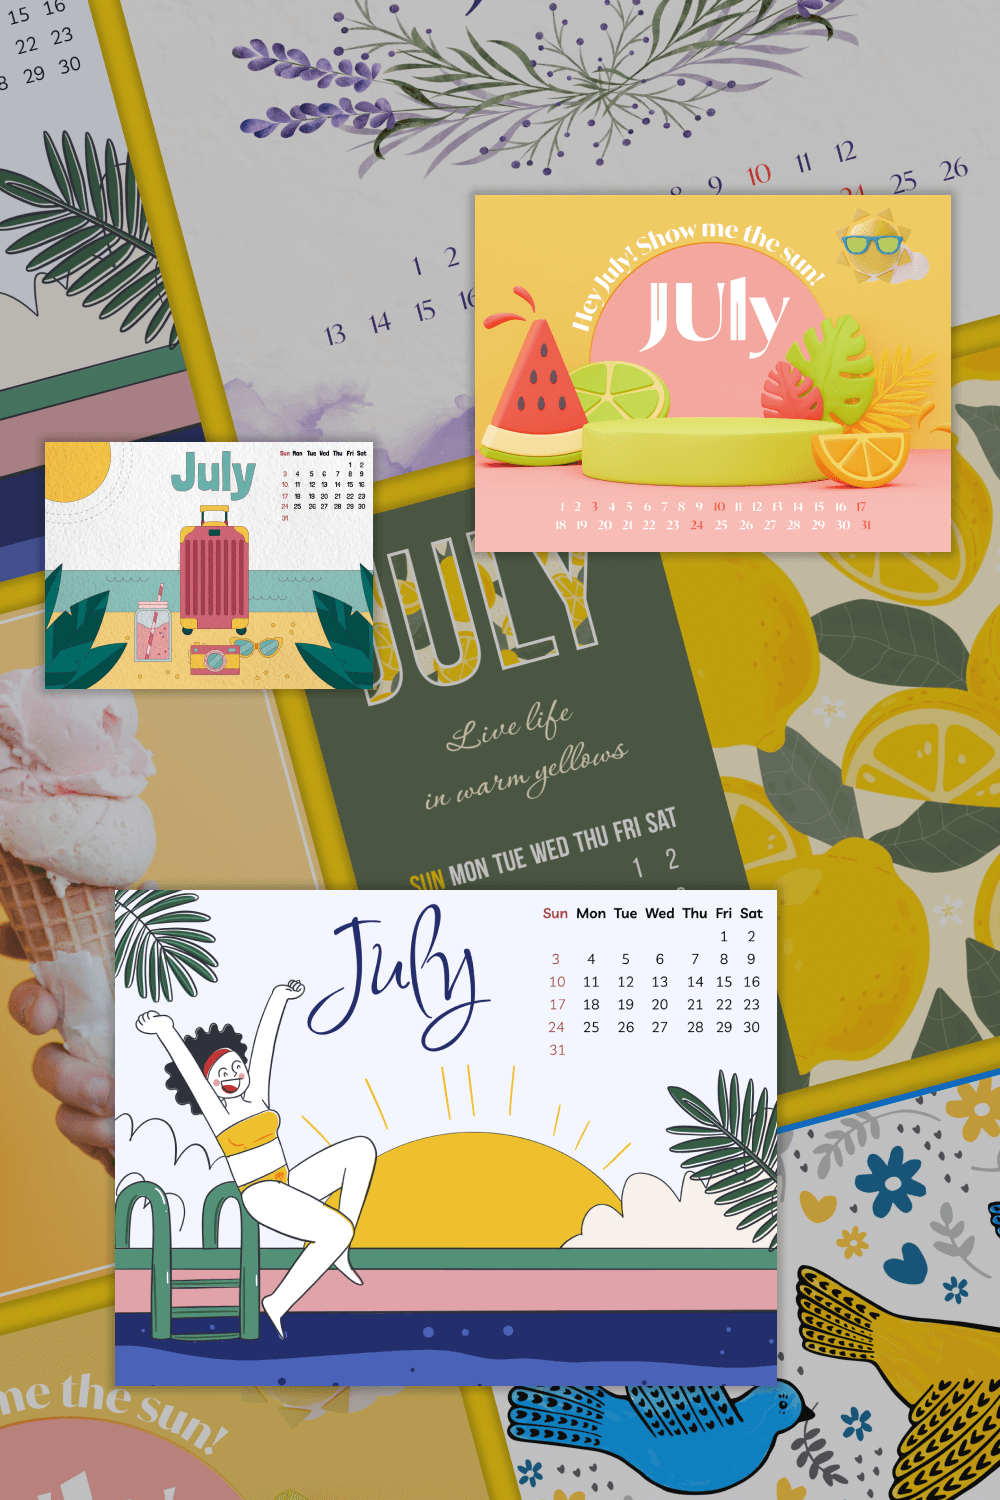 10 Free Editable July Calendars pinterest.